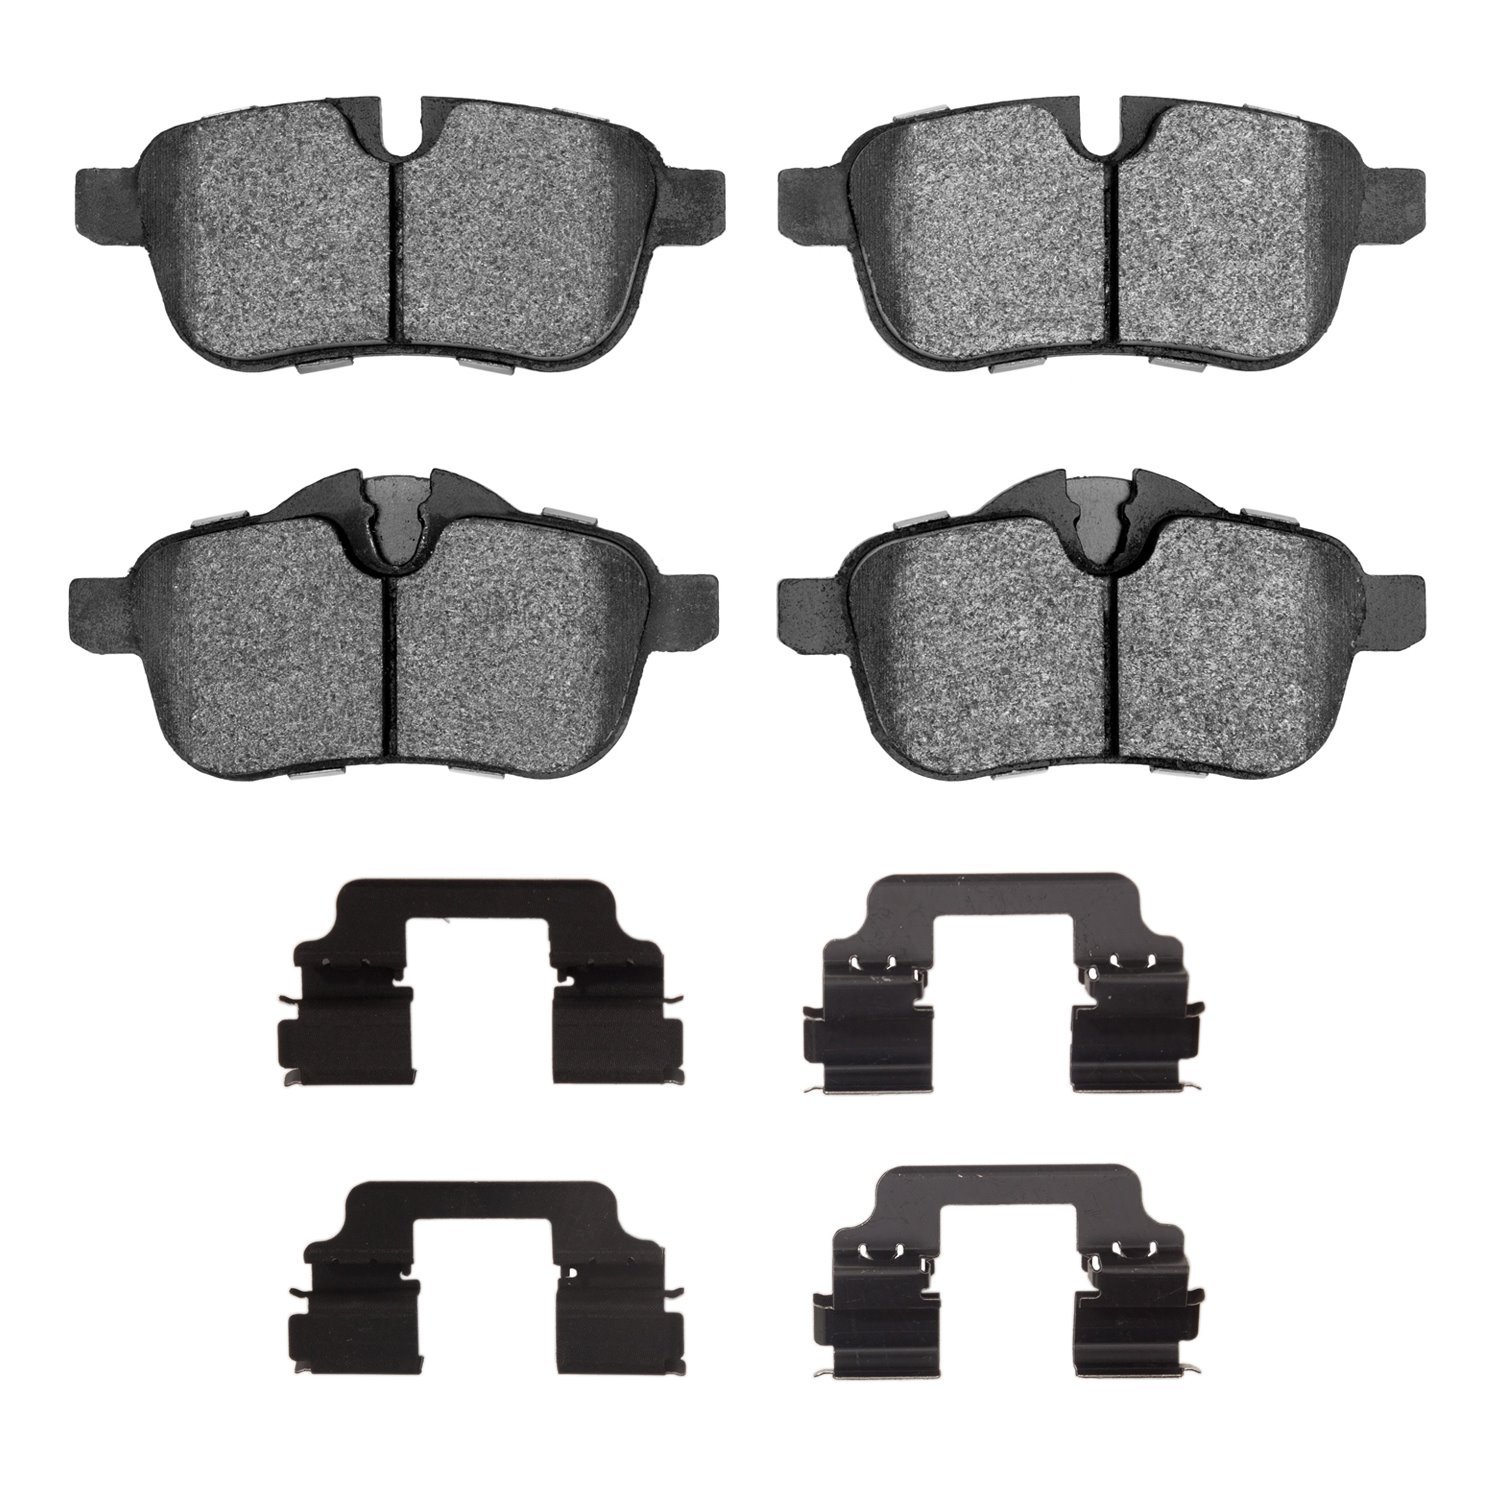 1311-1433-01 3000-Series Semi-Metallic Brake Pads & Hardware Kit, Fits Select BMW, Position: Rear